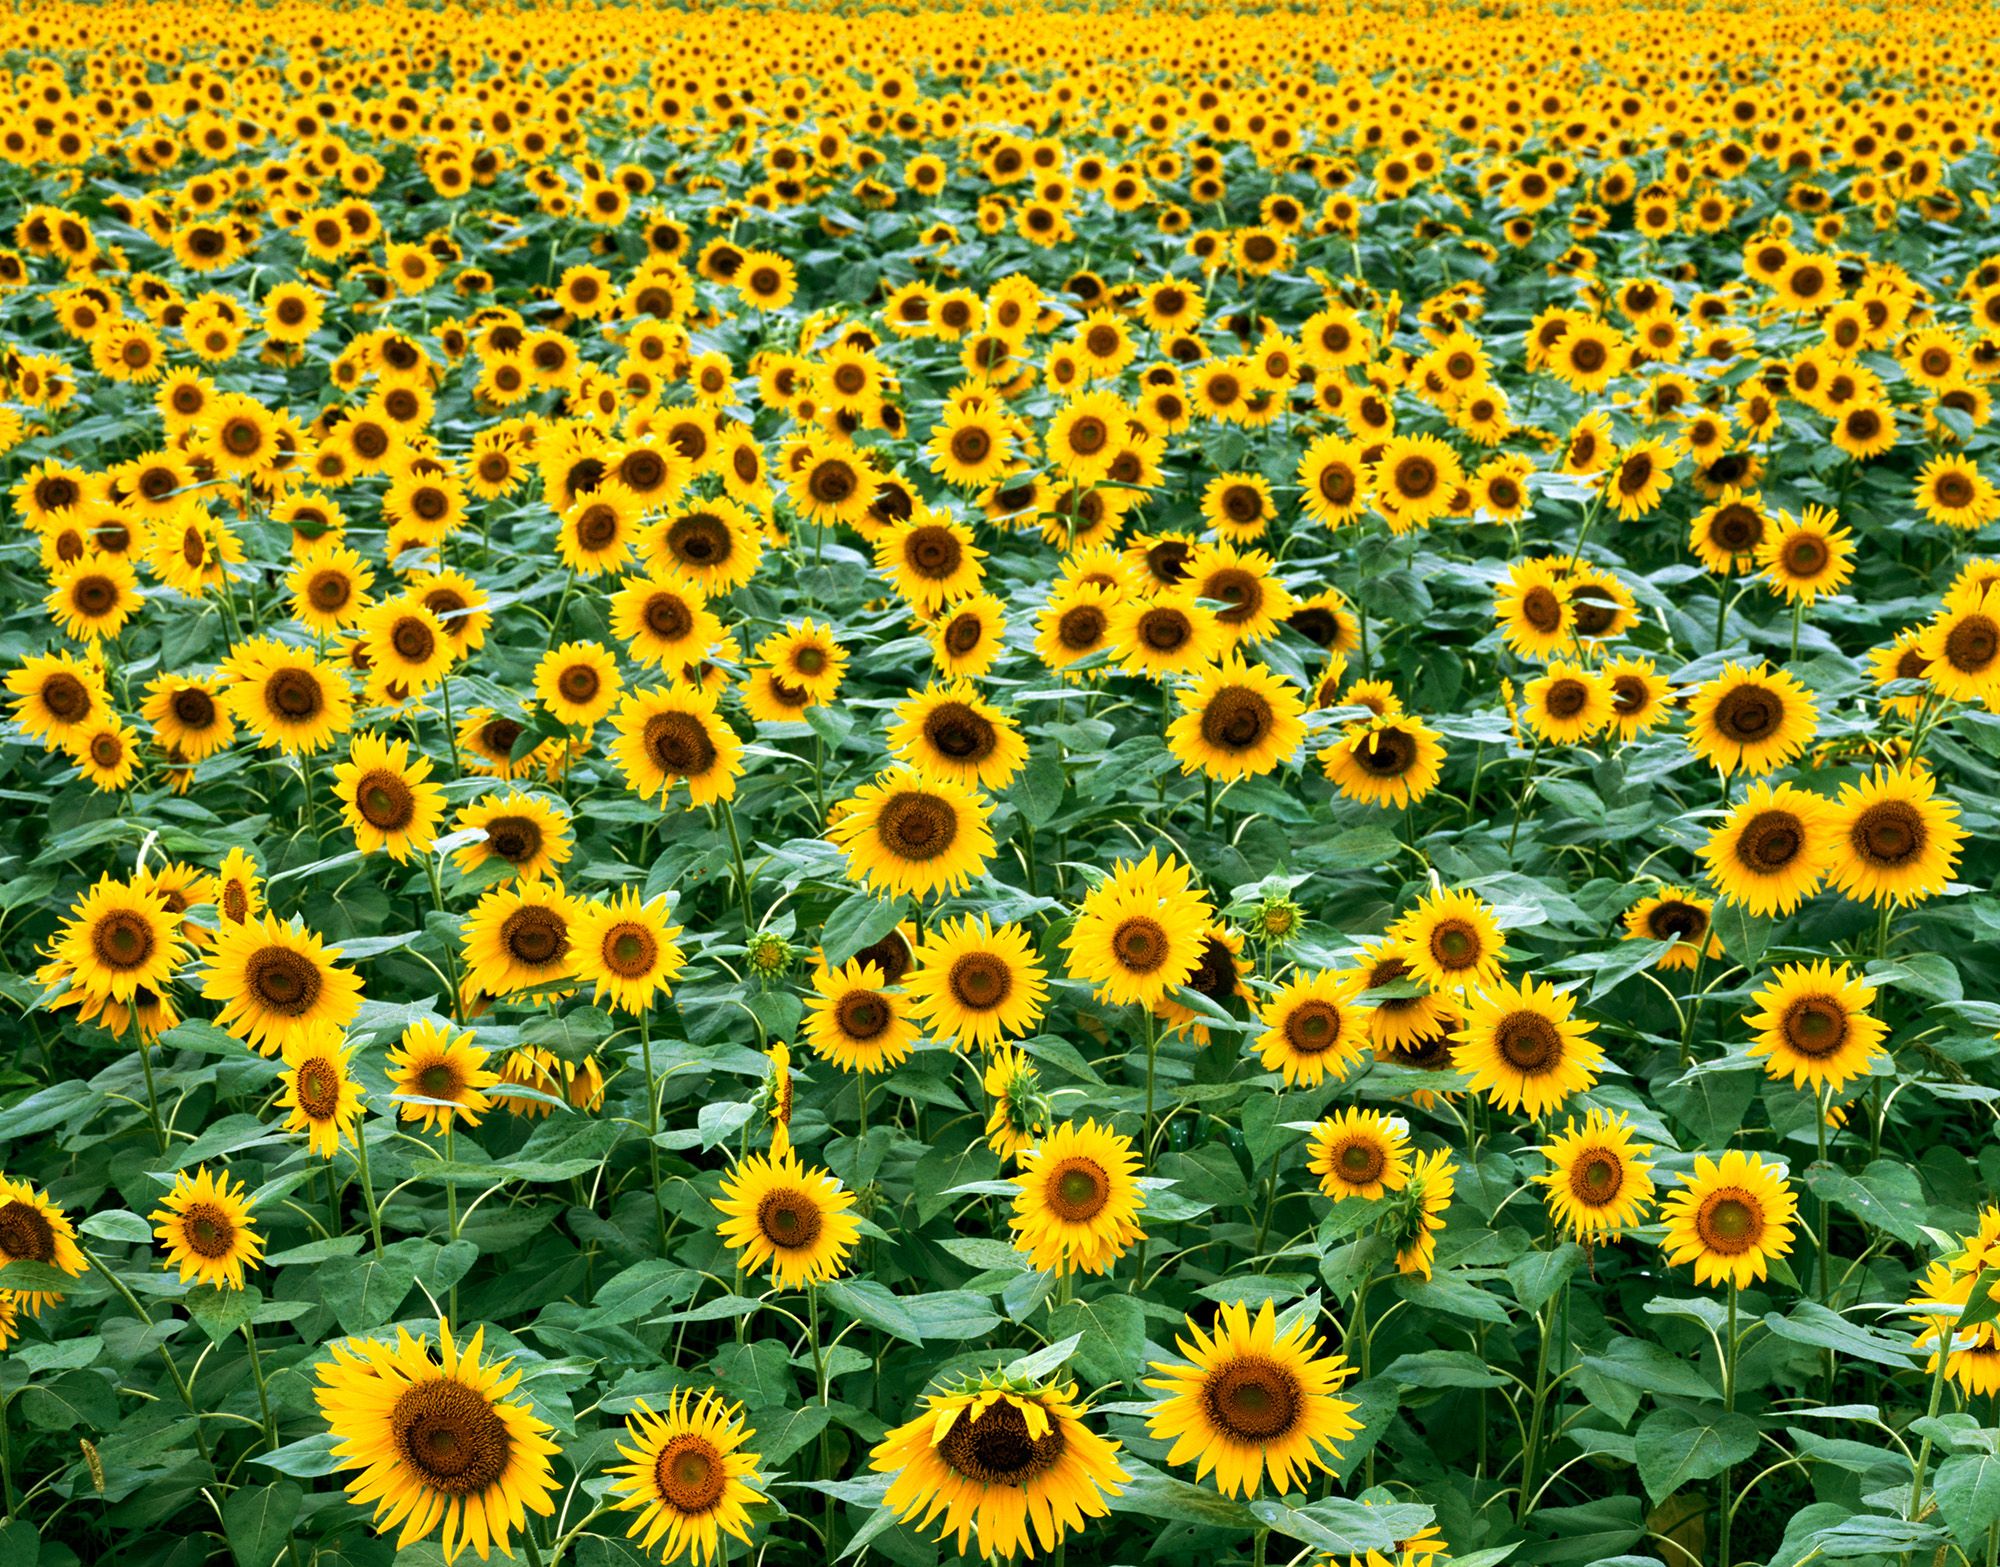 Sunflower Field Near Me Texas